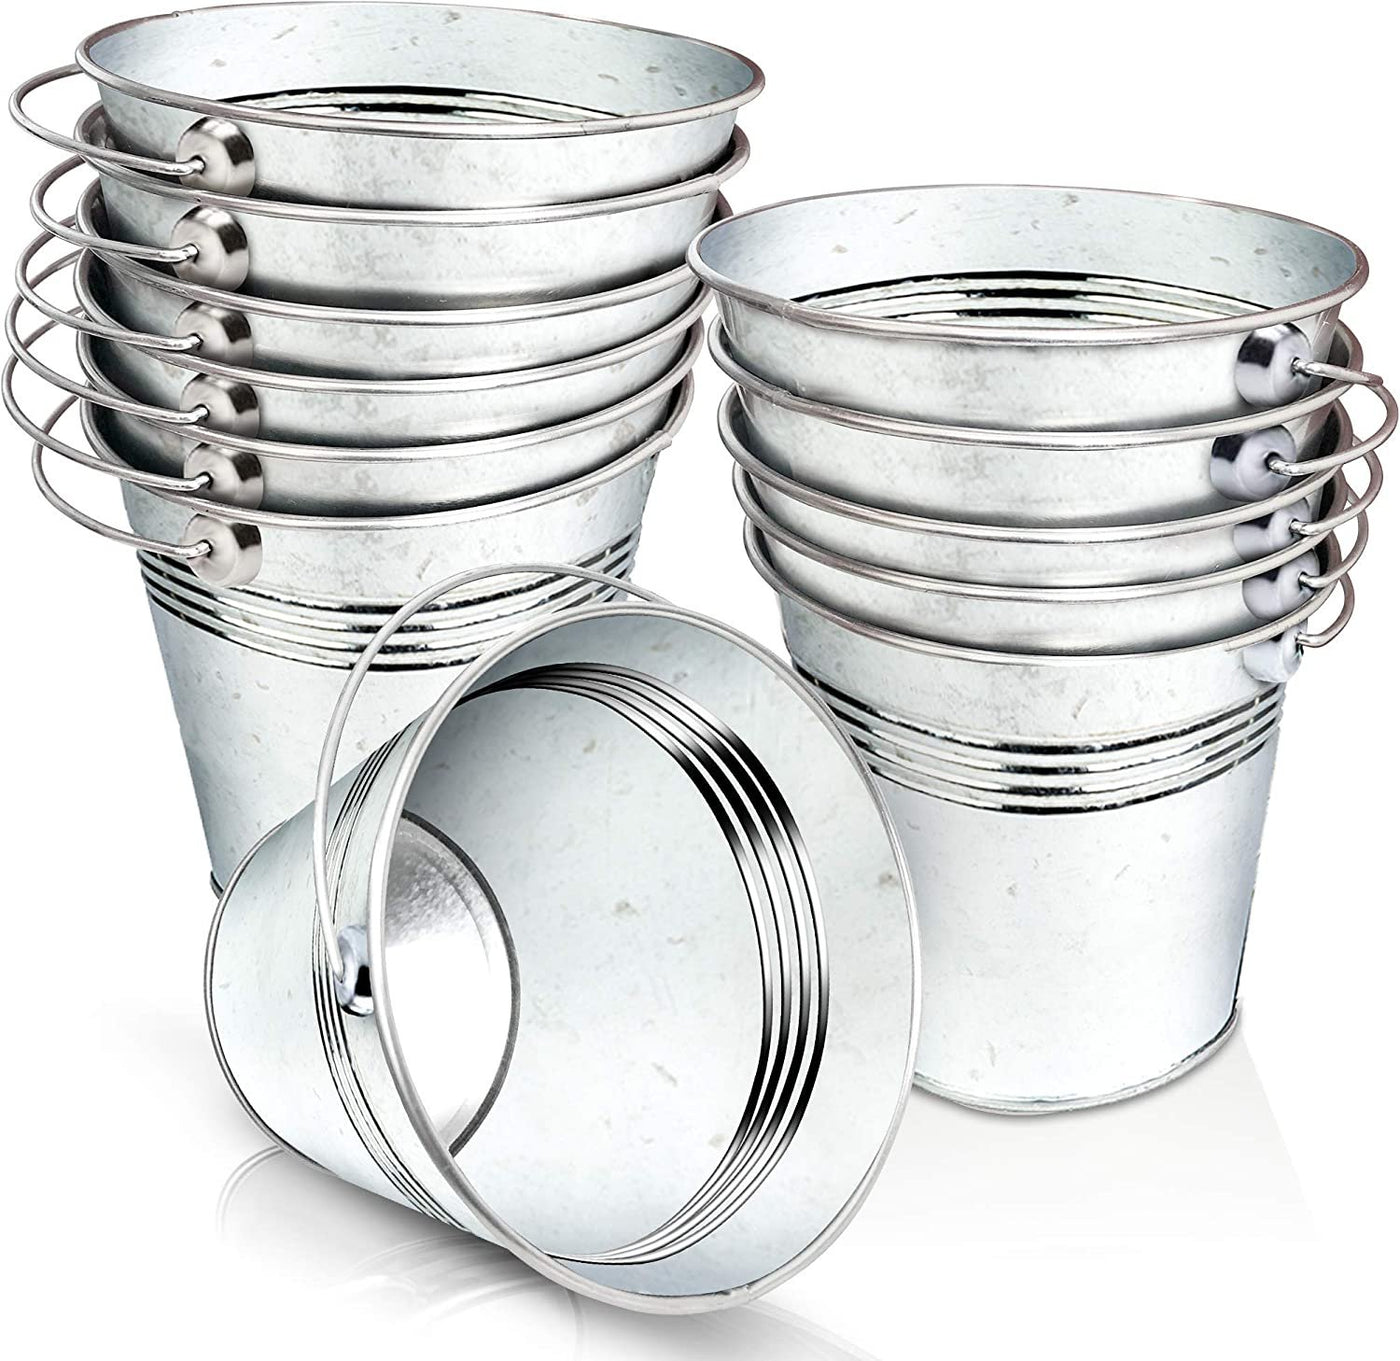 Mini Galvanized Metal Buckets with Handles - Set of 12 - 2.5" Metallic Pails - Rustic Wedding Decorations, Centerpieces for Party, Decorative Ice Buckets, Vase, Garden Planters